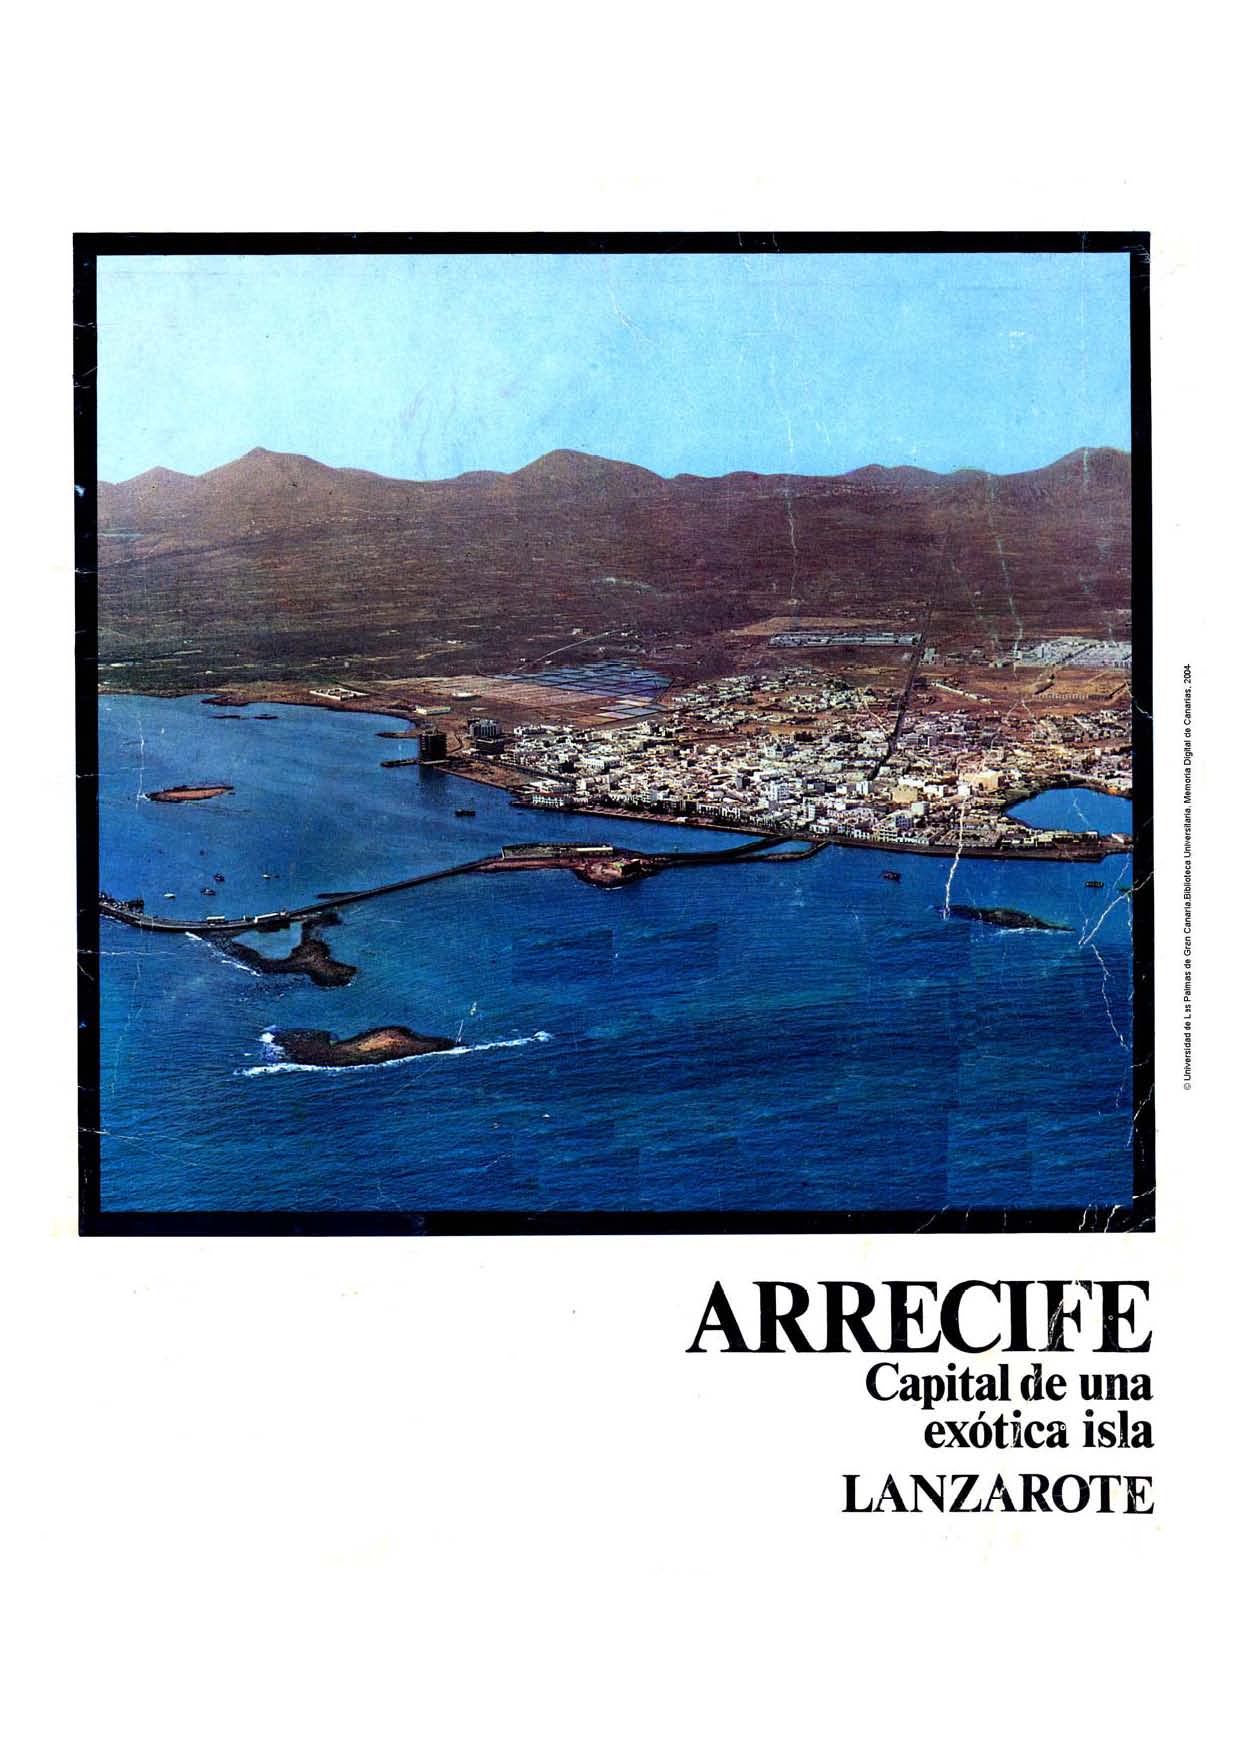 Arrecife, capital de una exótica isla (Fiestas de San Ginés 1970)